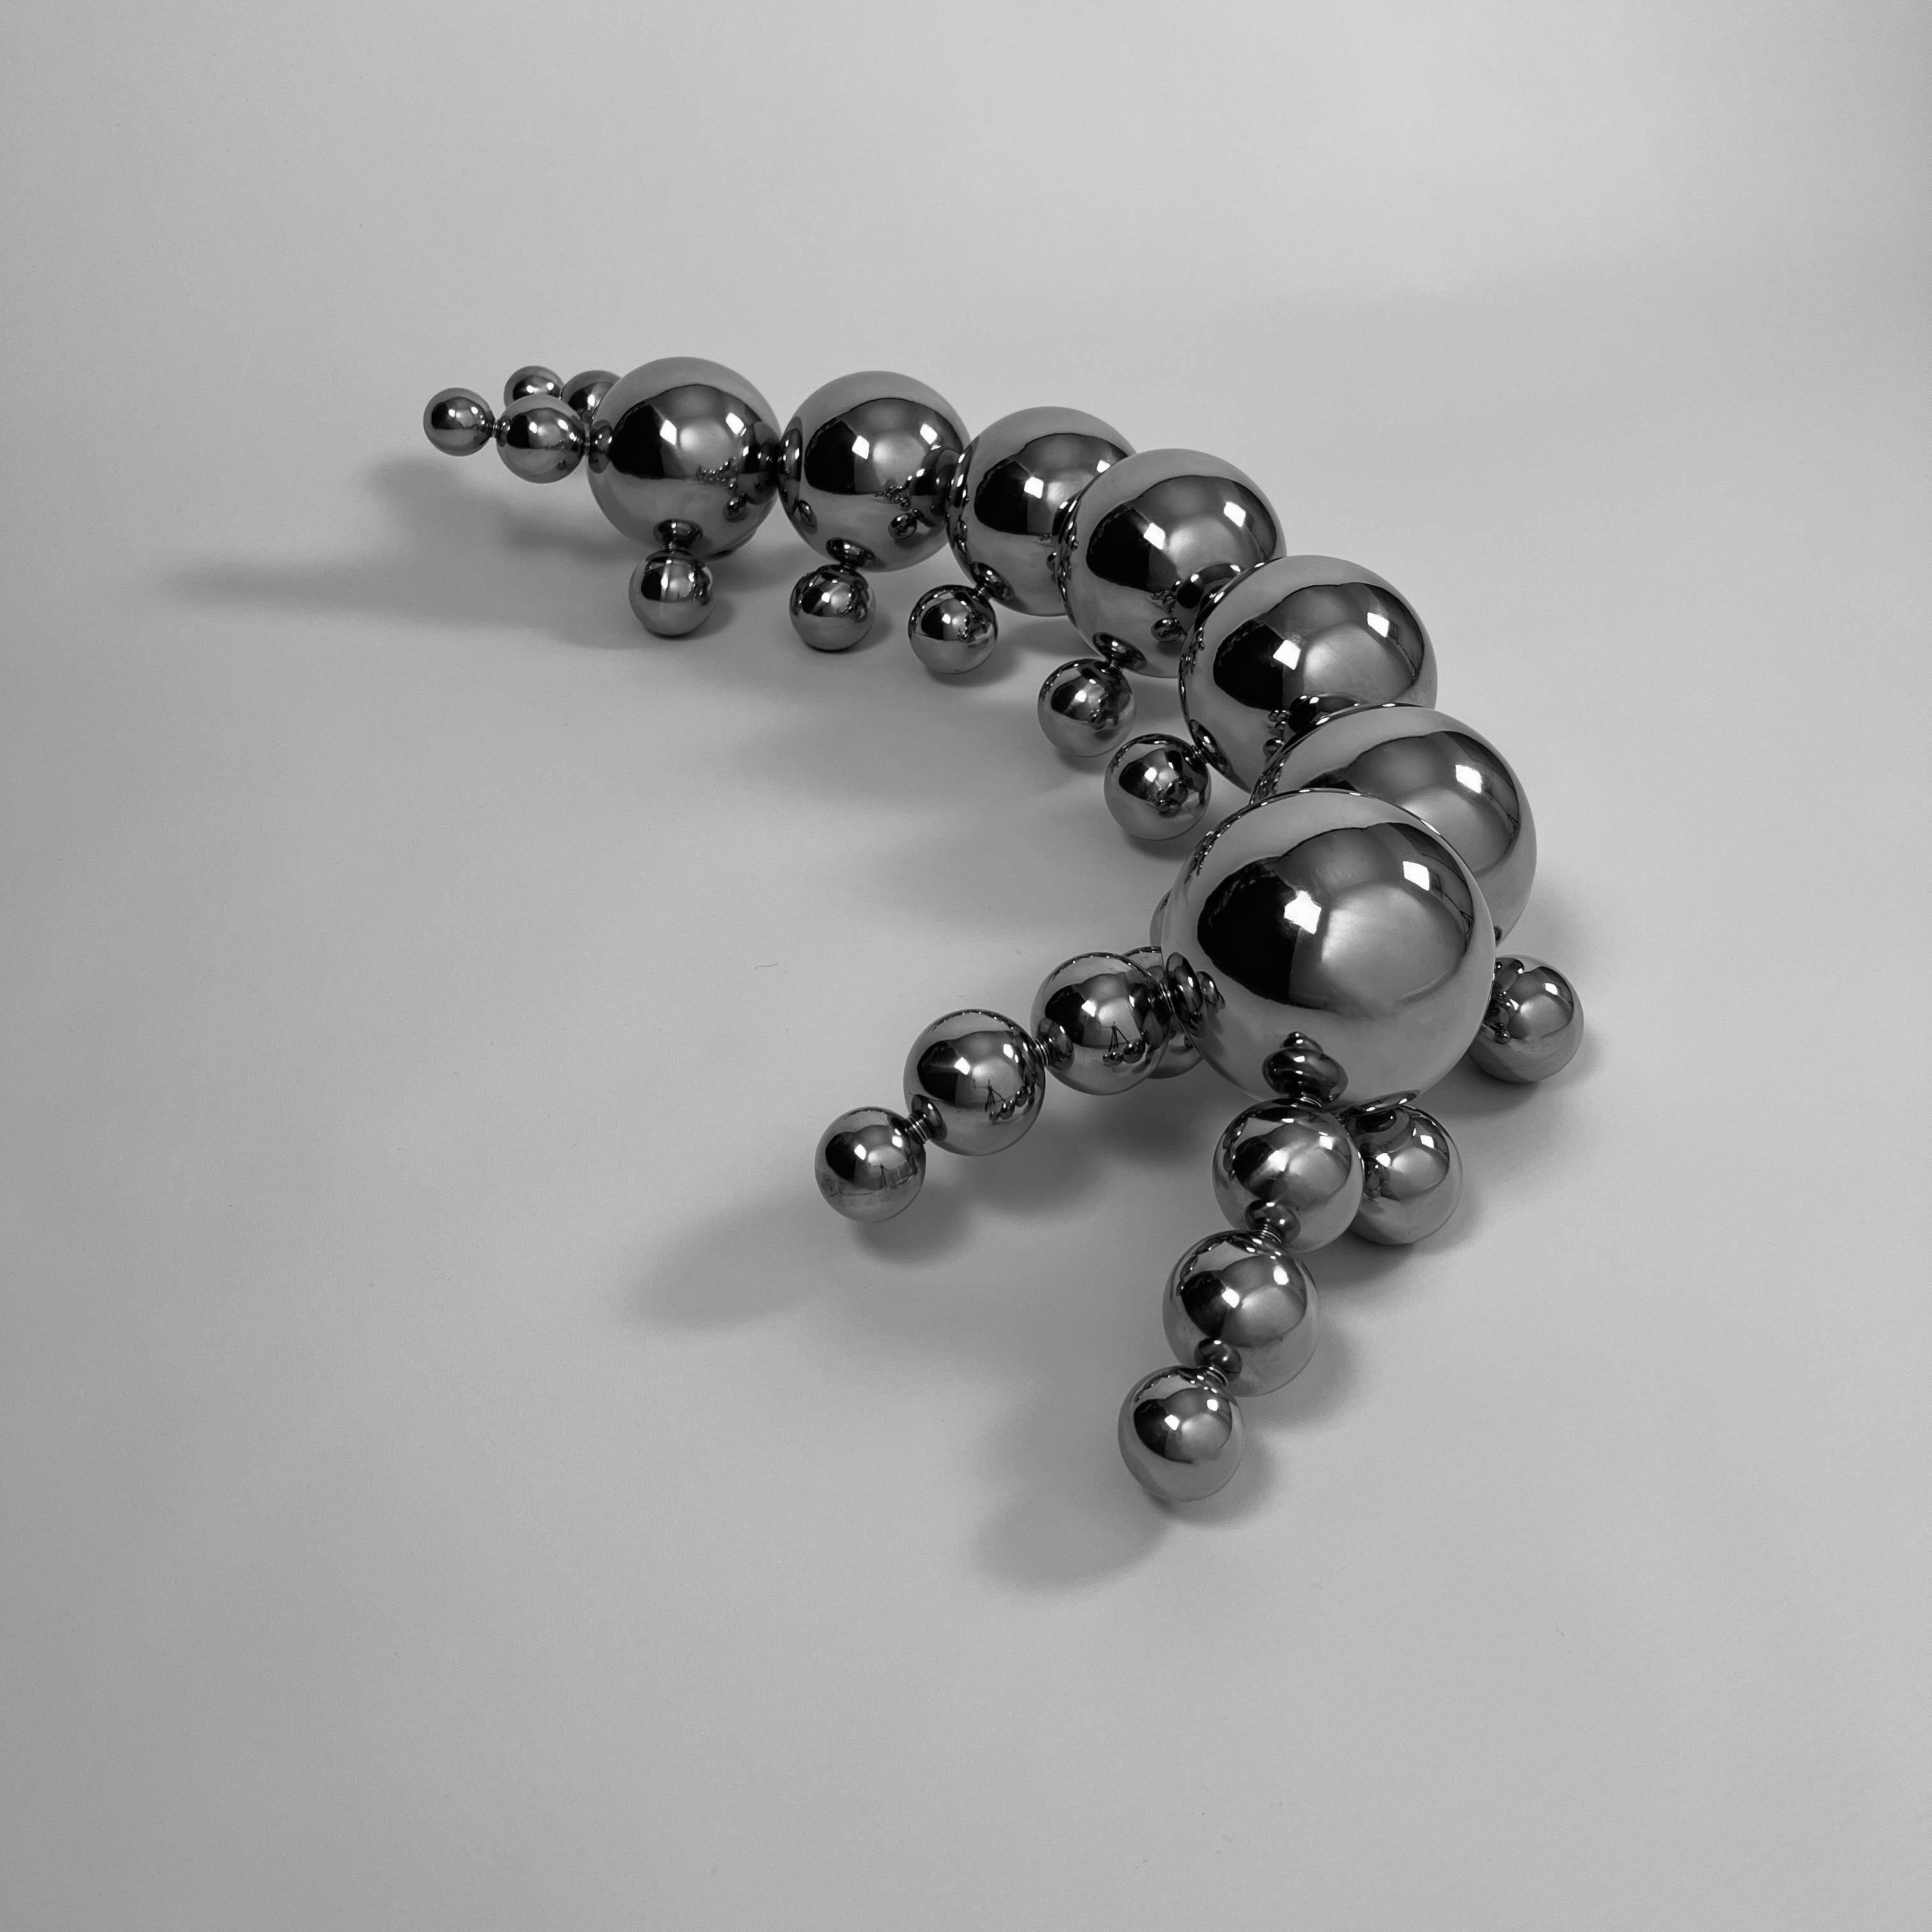 Stainless Steel Сentipede Minimalistic Bug Sculpture 8